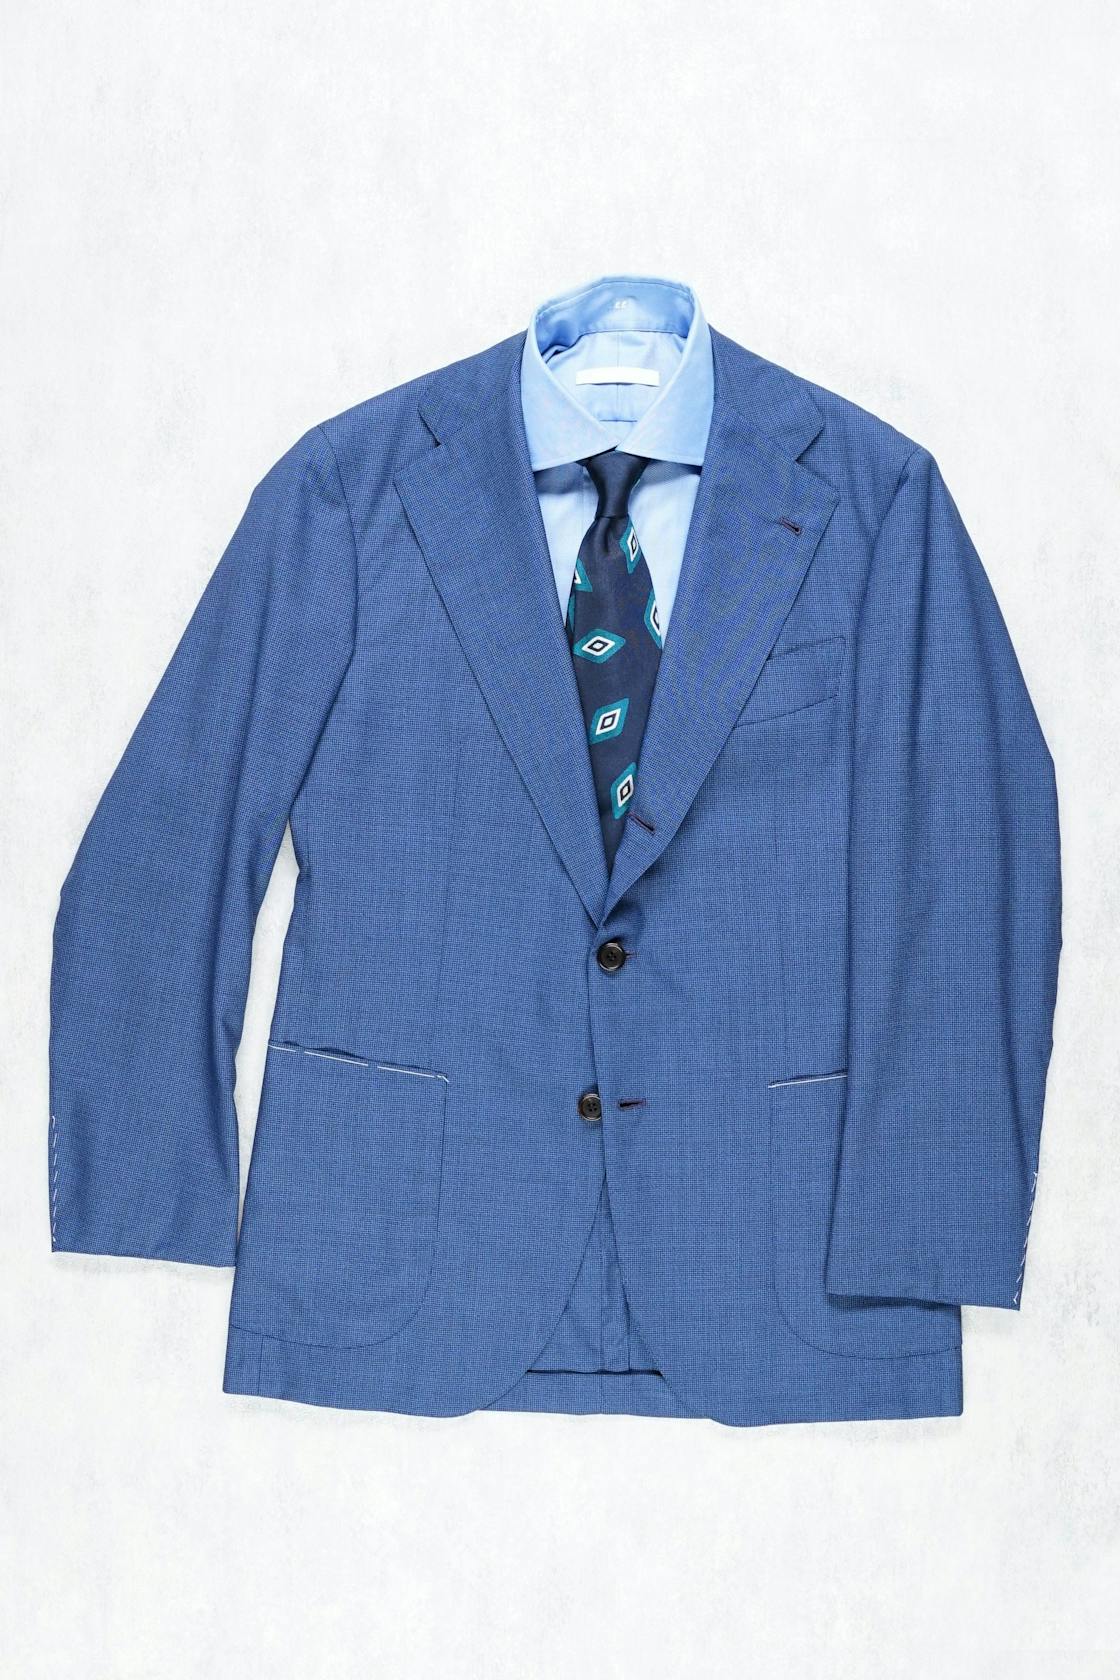 Orazio Luciano Blue Wool Houndstooth Sport Coat